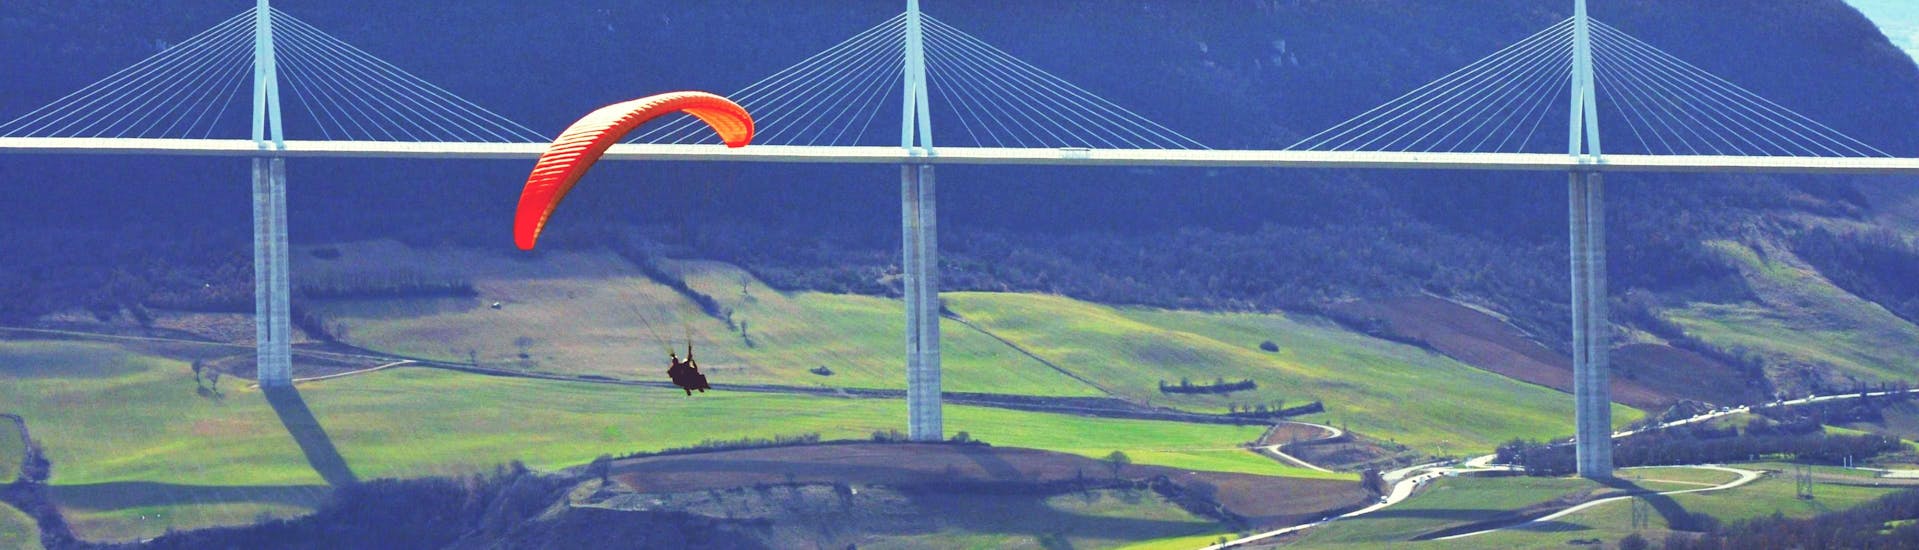 Lange afstand tandem paragliding in Millau (vanaf 4 j.) - Grands Causses (regionaal natuurpark).